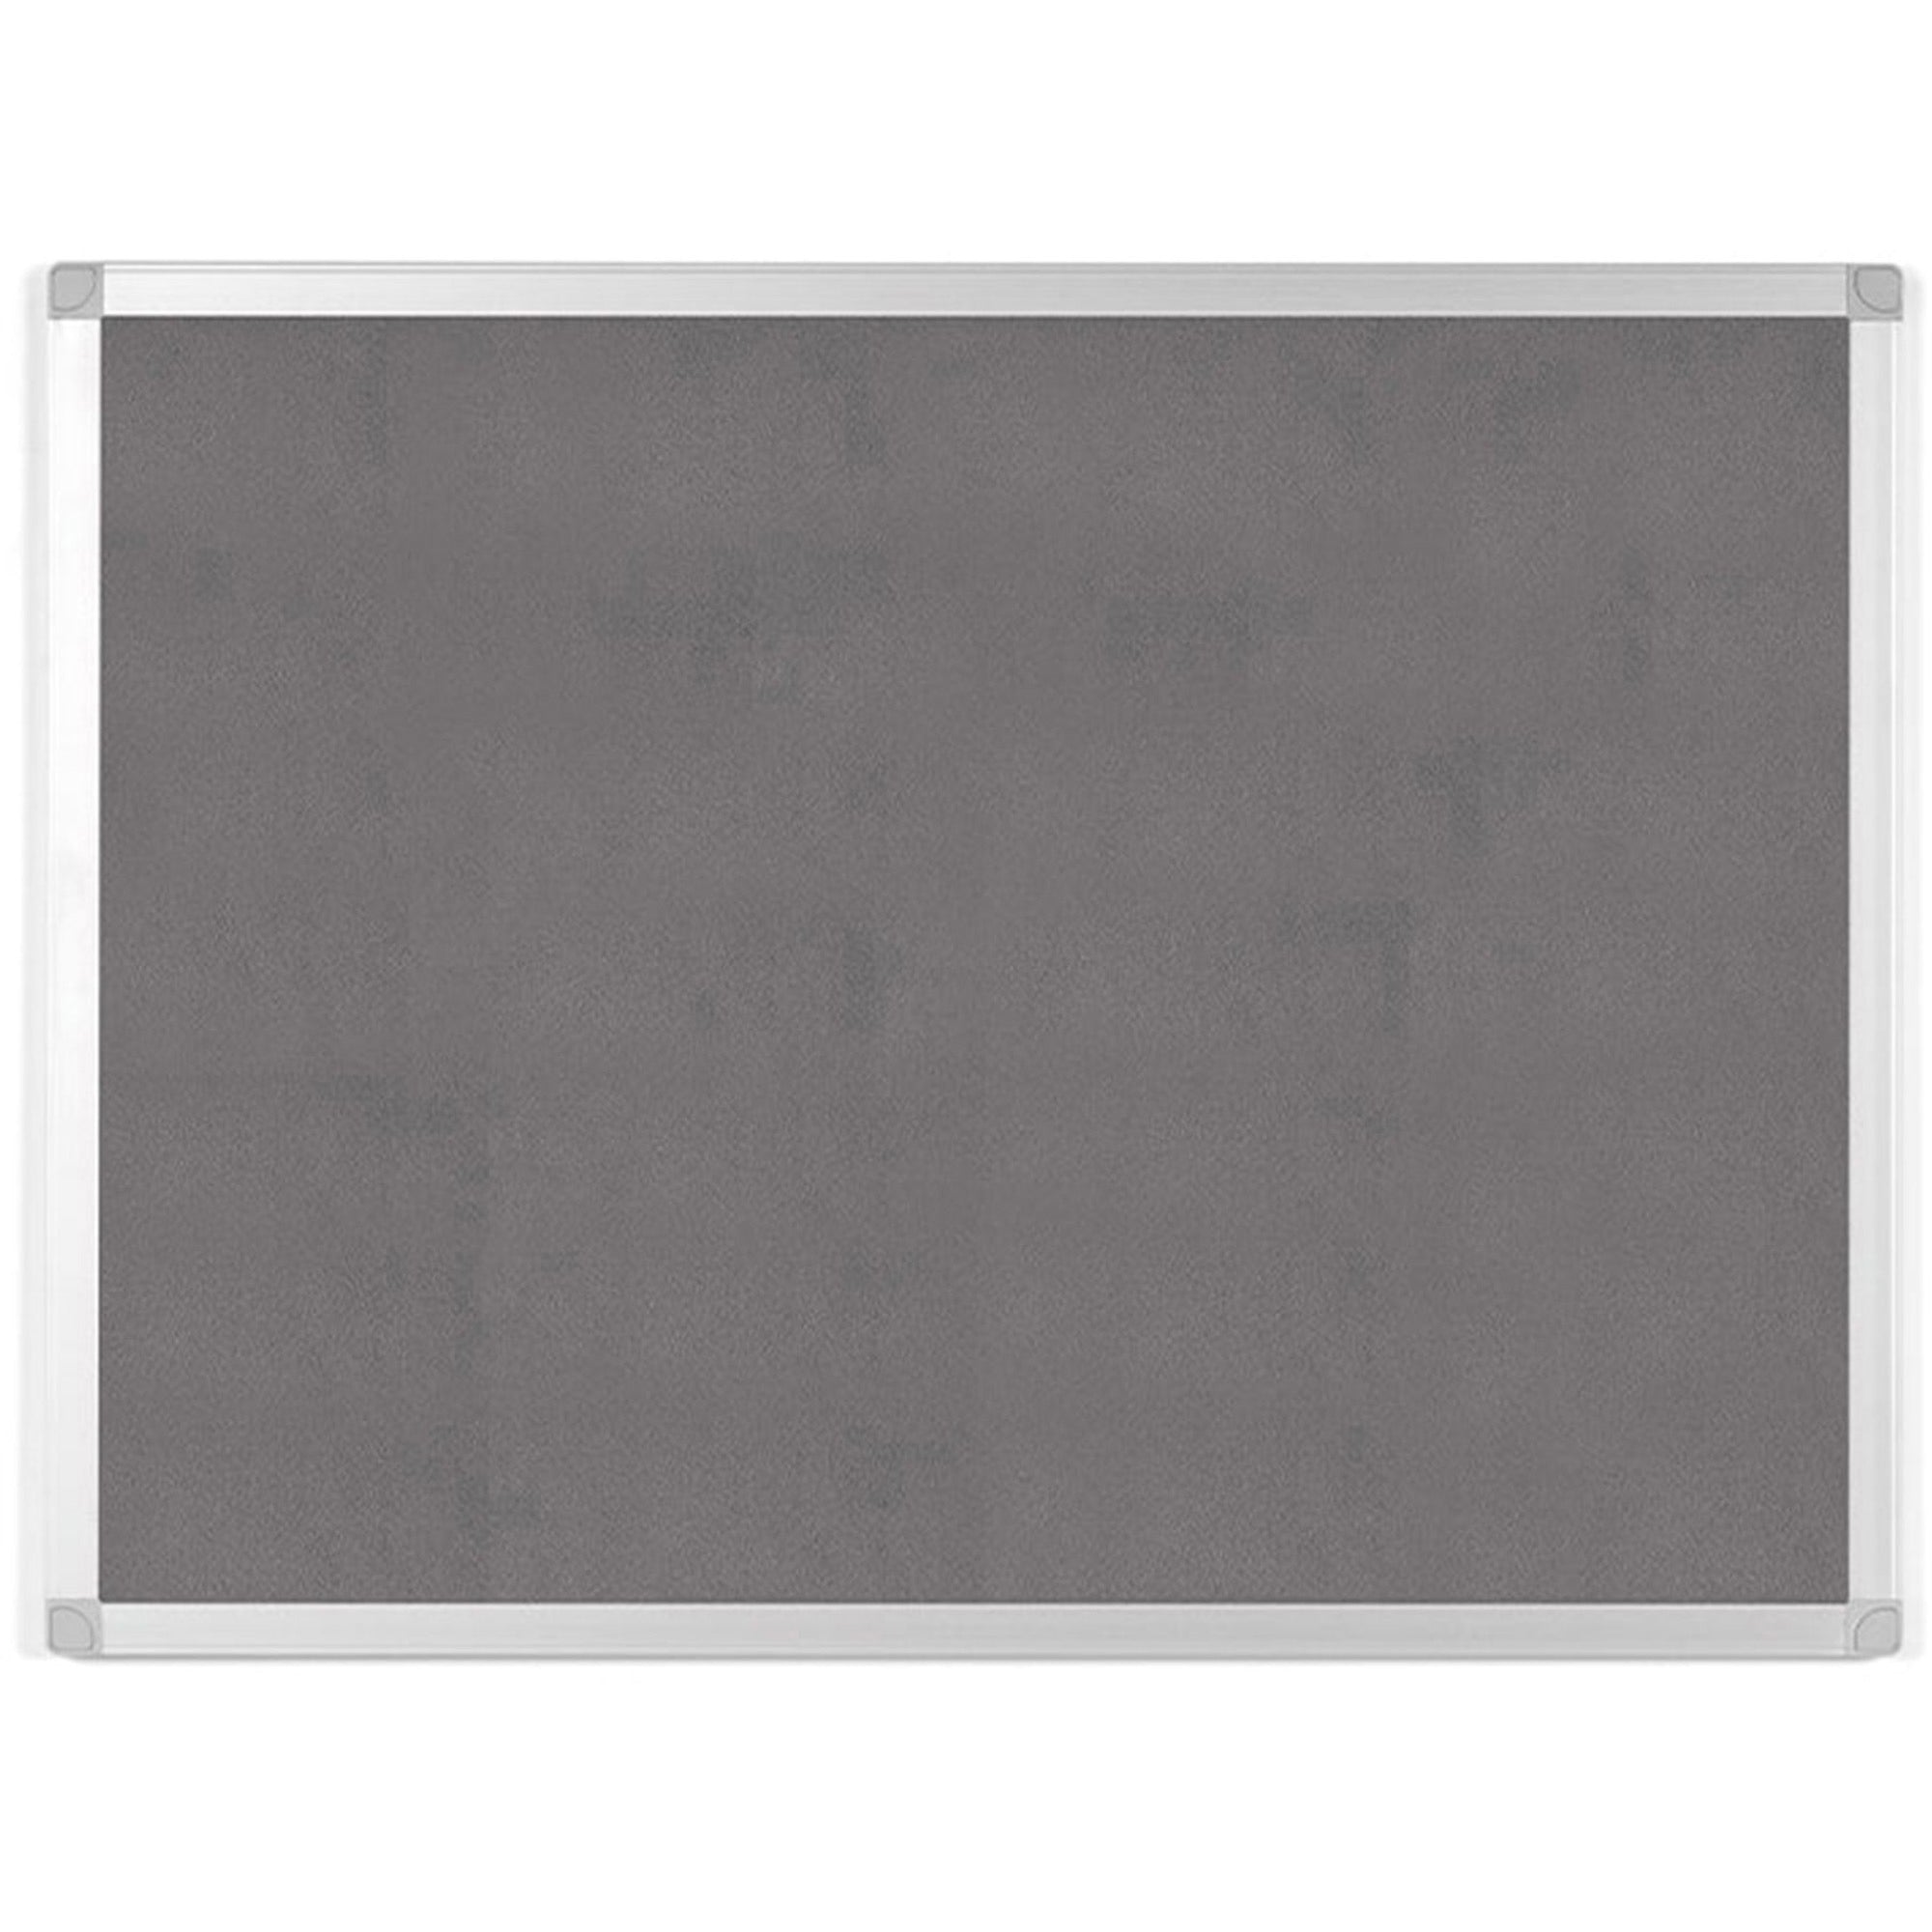 bi-silque-ayda-fabric-36w-bulletin-board-gray-fabric-surface-robust-tackable-sleek-style-1-each-05-x-36_bvcfa05429214 - 1